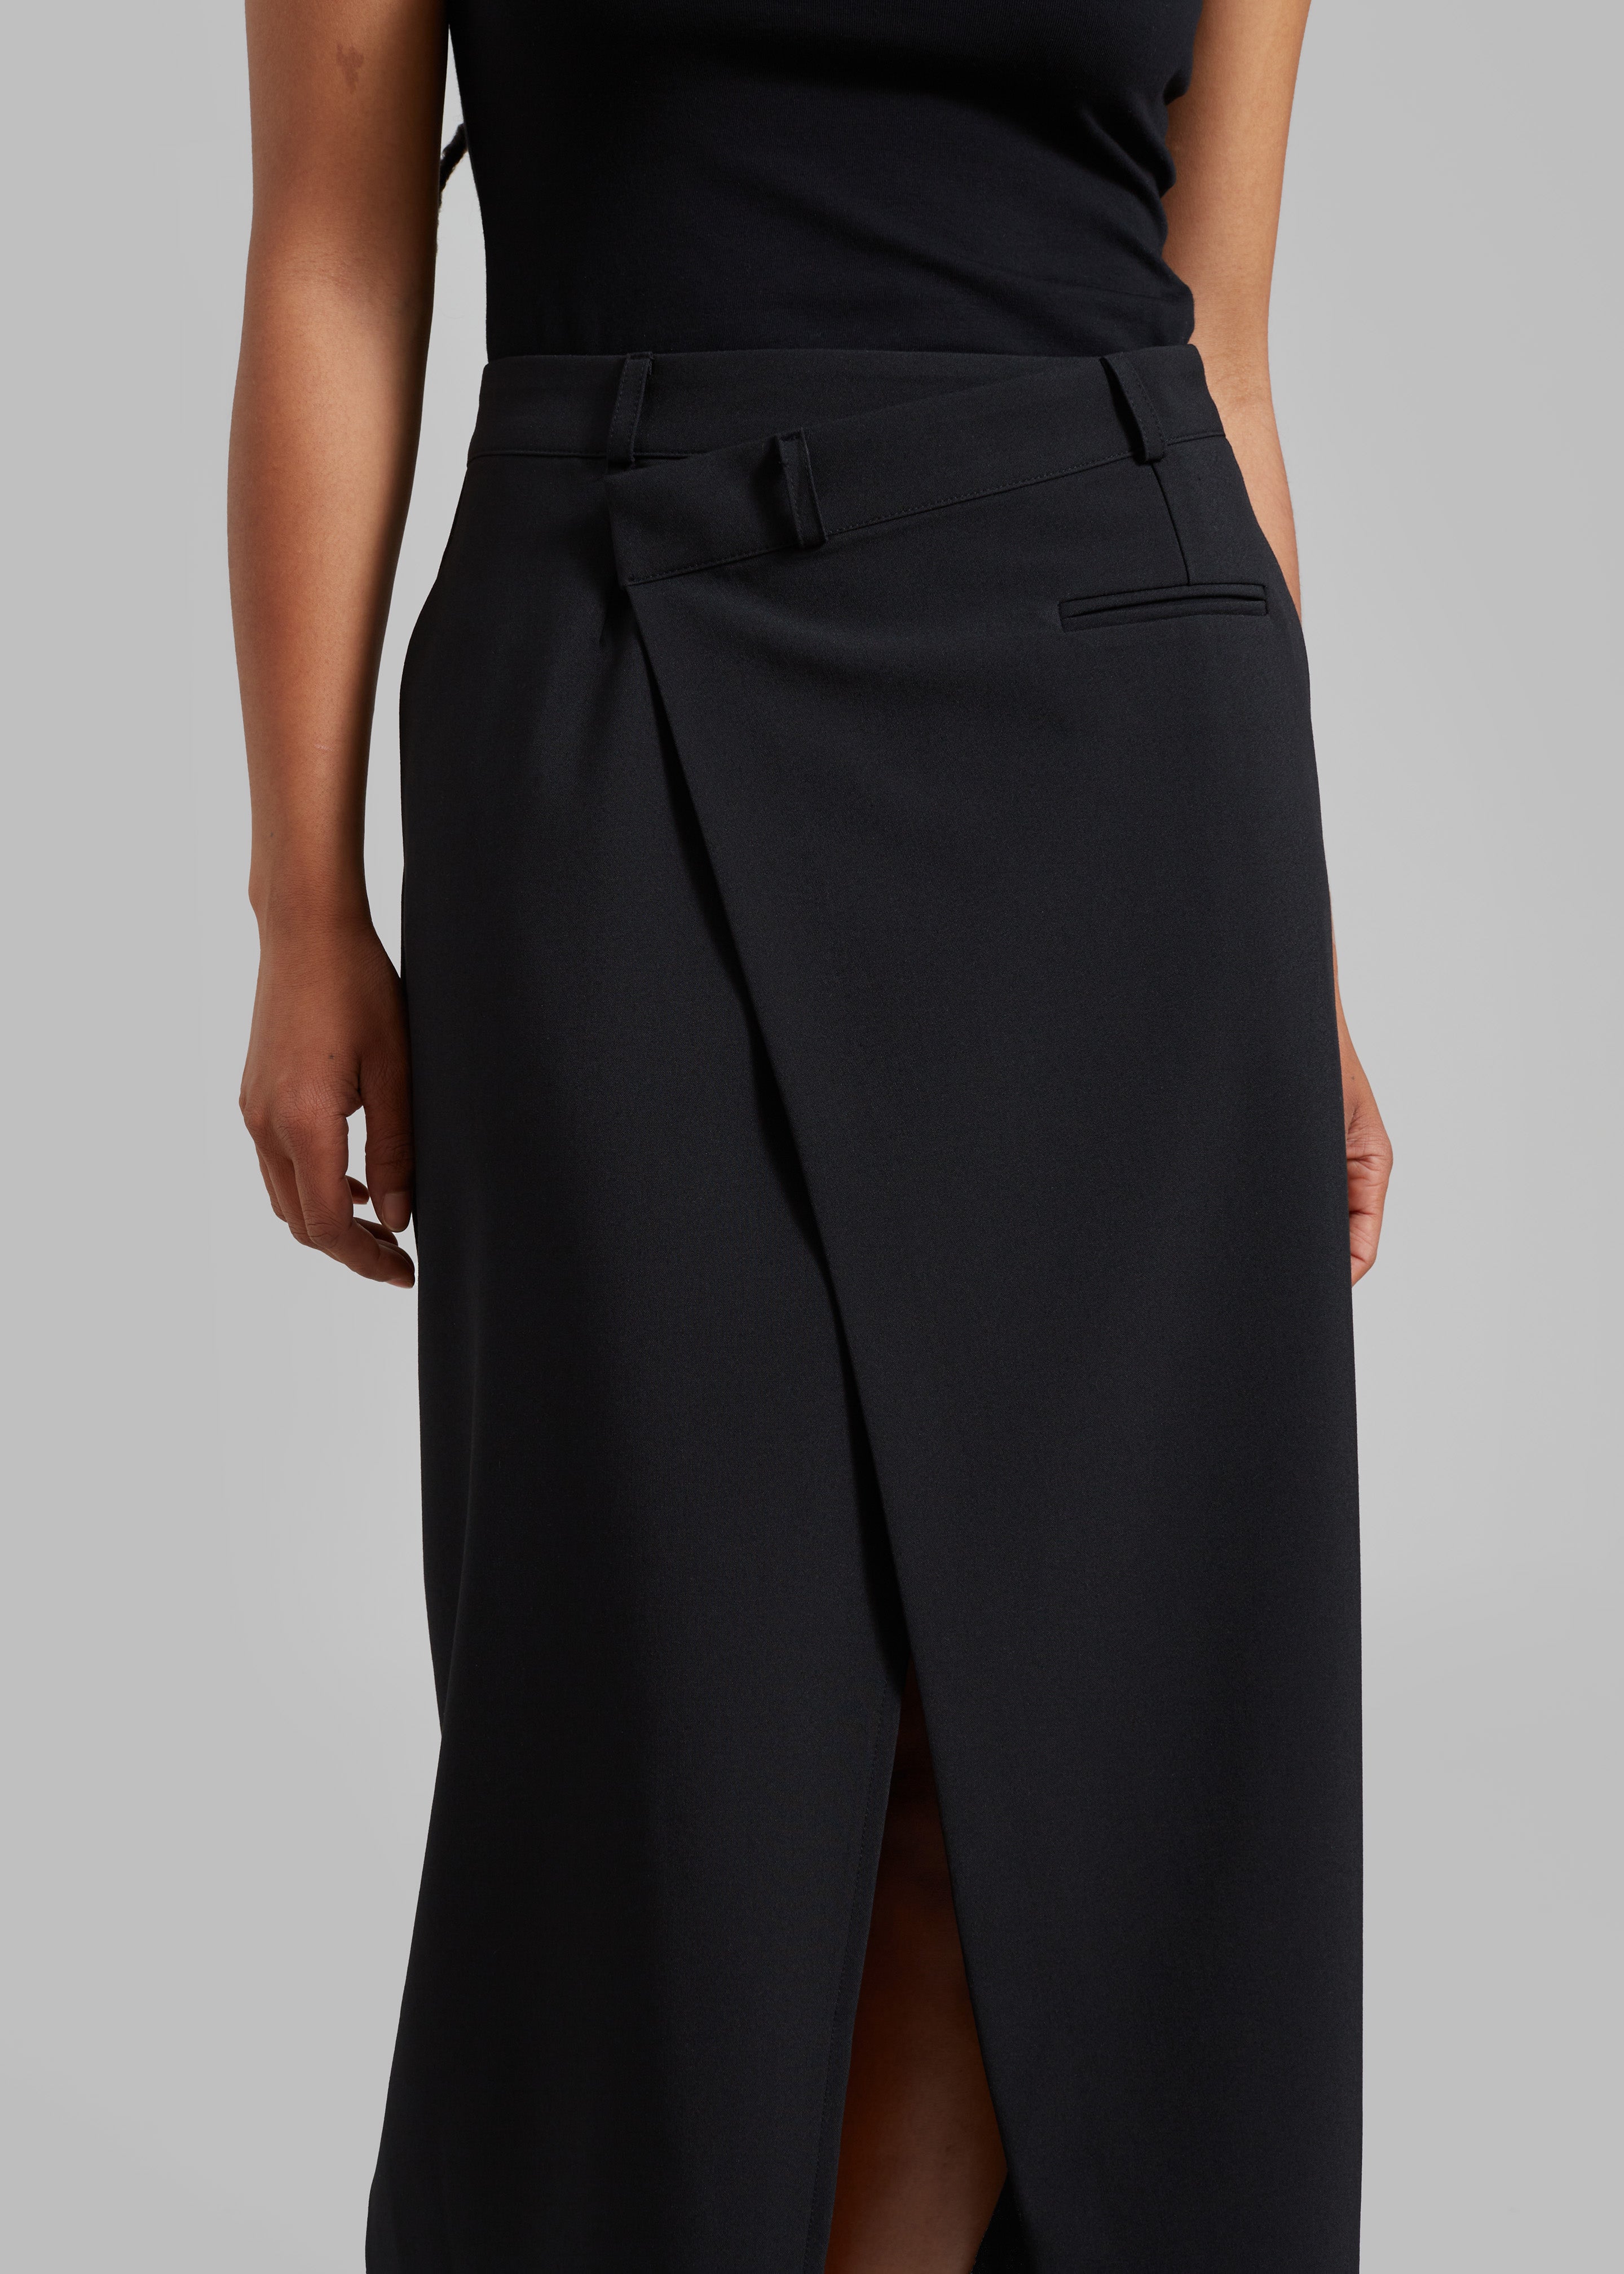 Annabel Asymmetric Midi Skirt - Black - 2